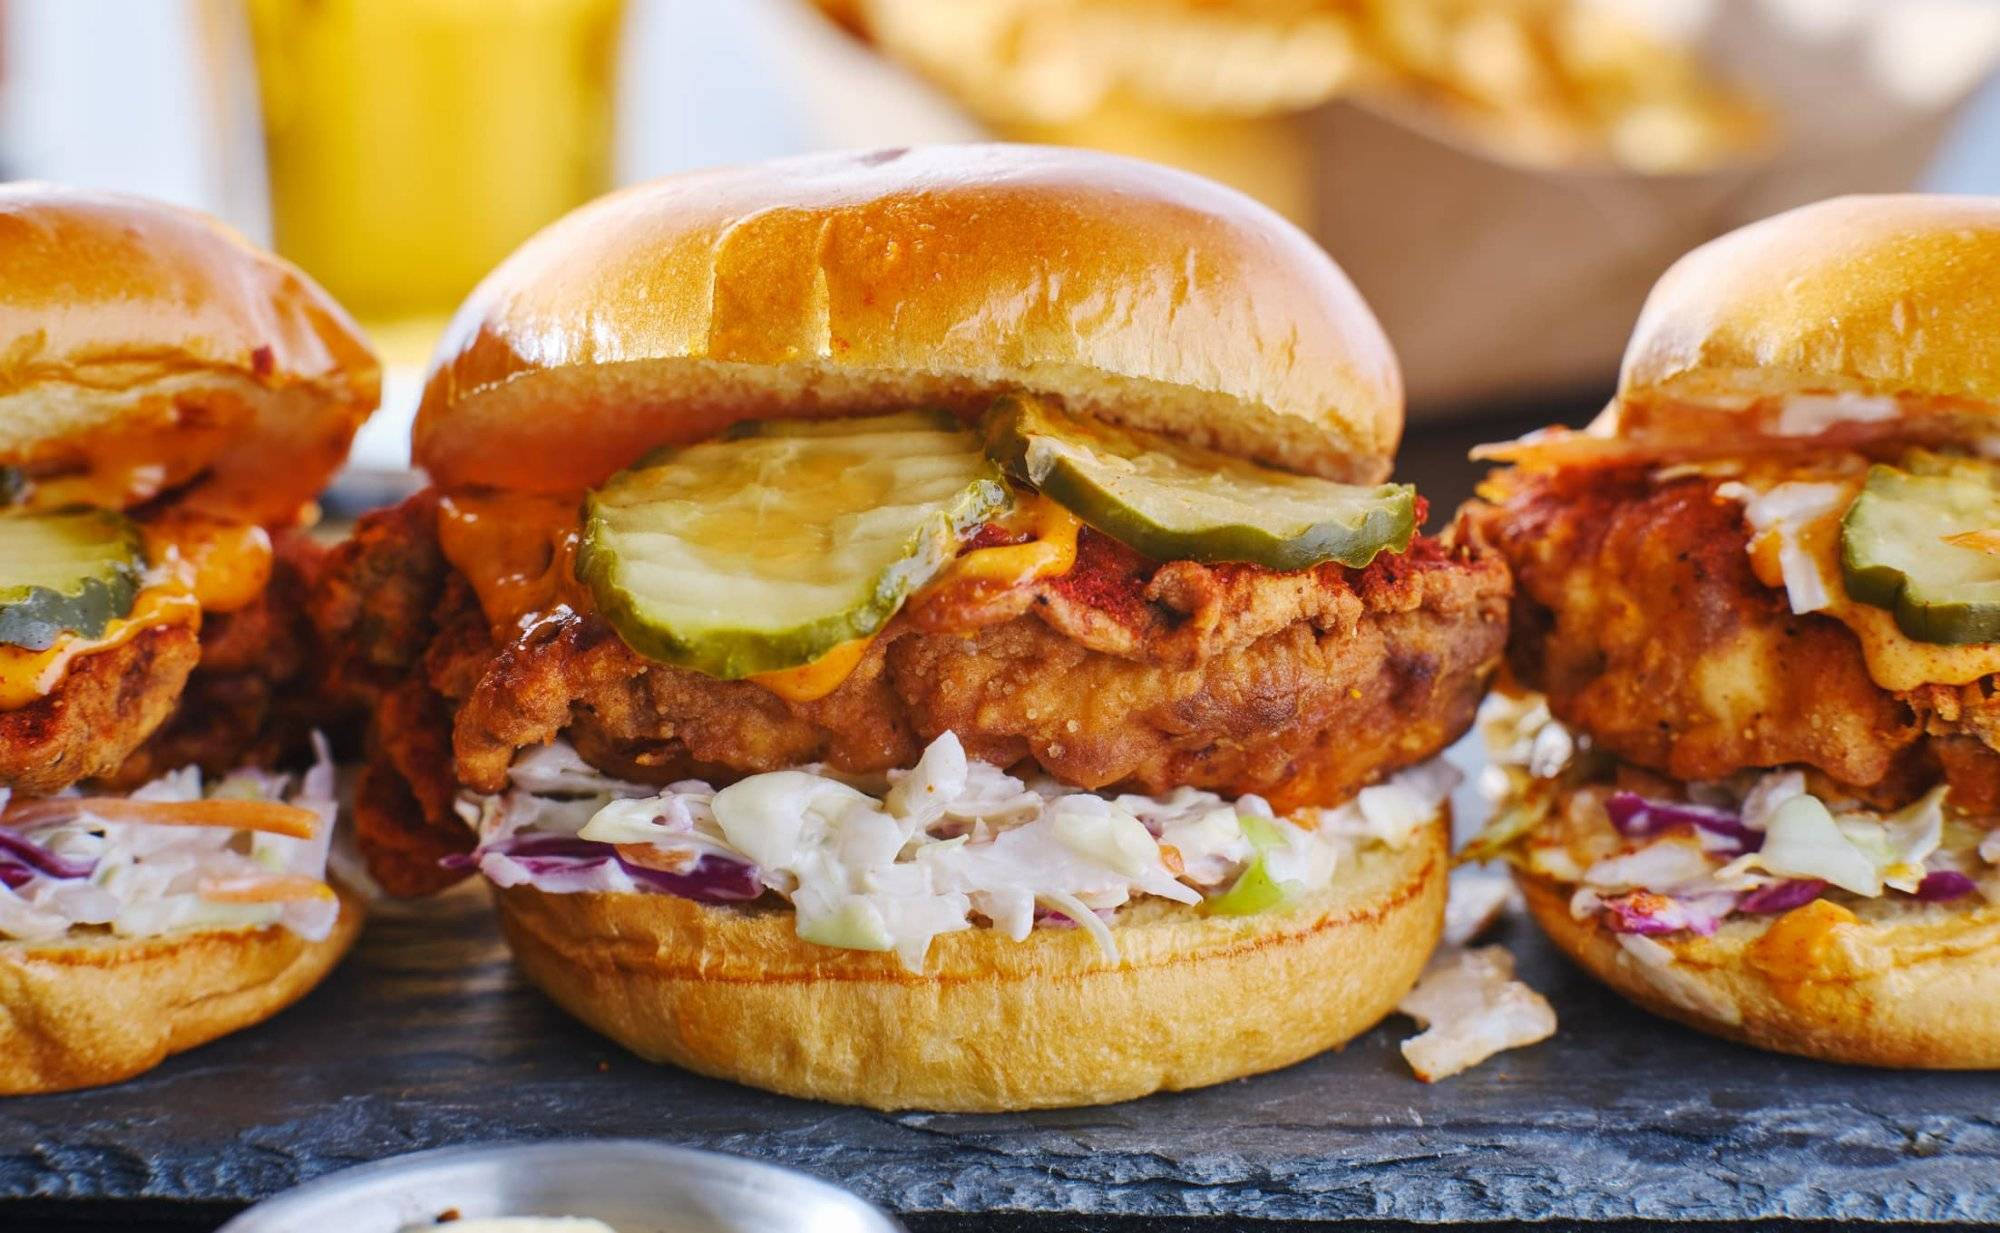 Try Arlington Ricky’s Nashville Hot Chicken at Arbrook Oaks Plaza